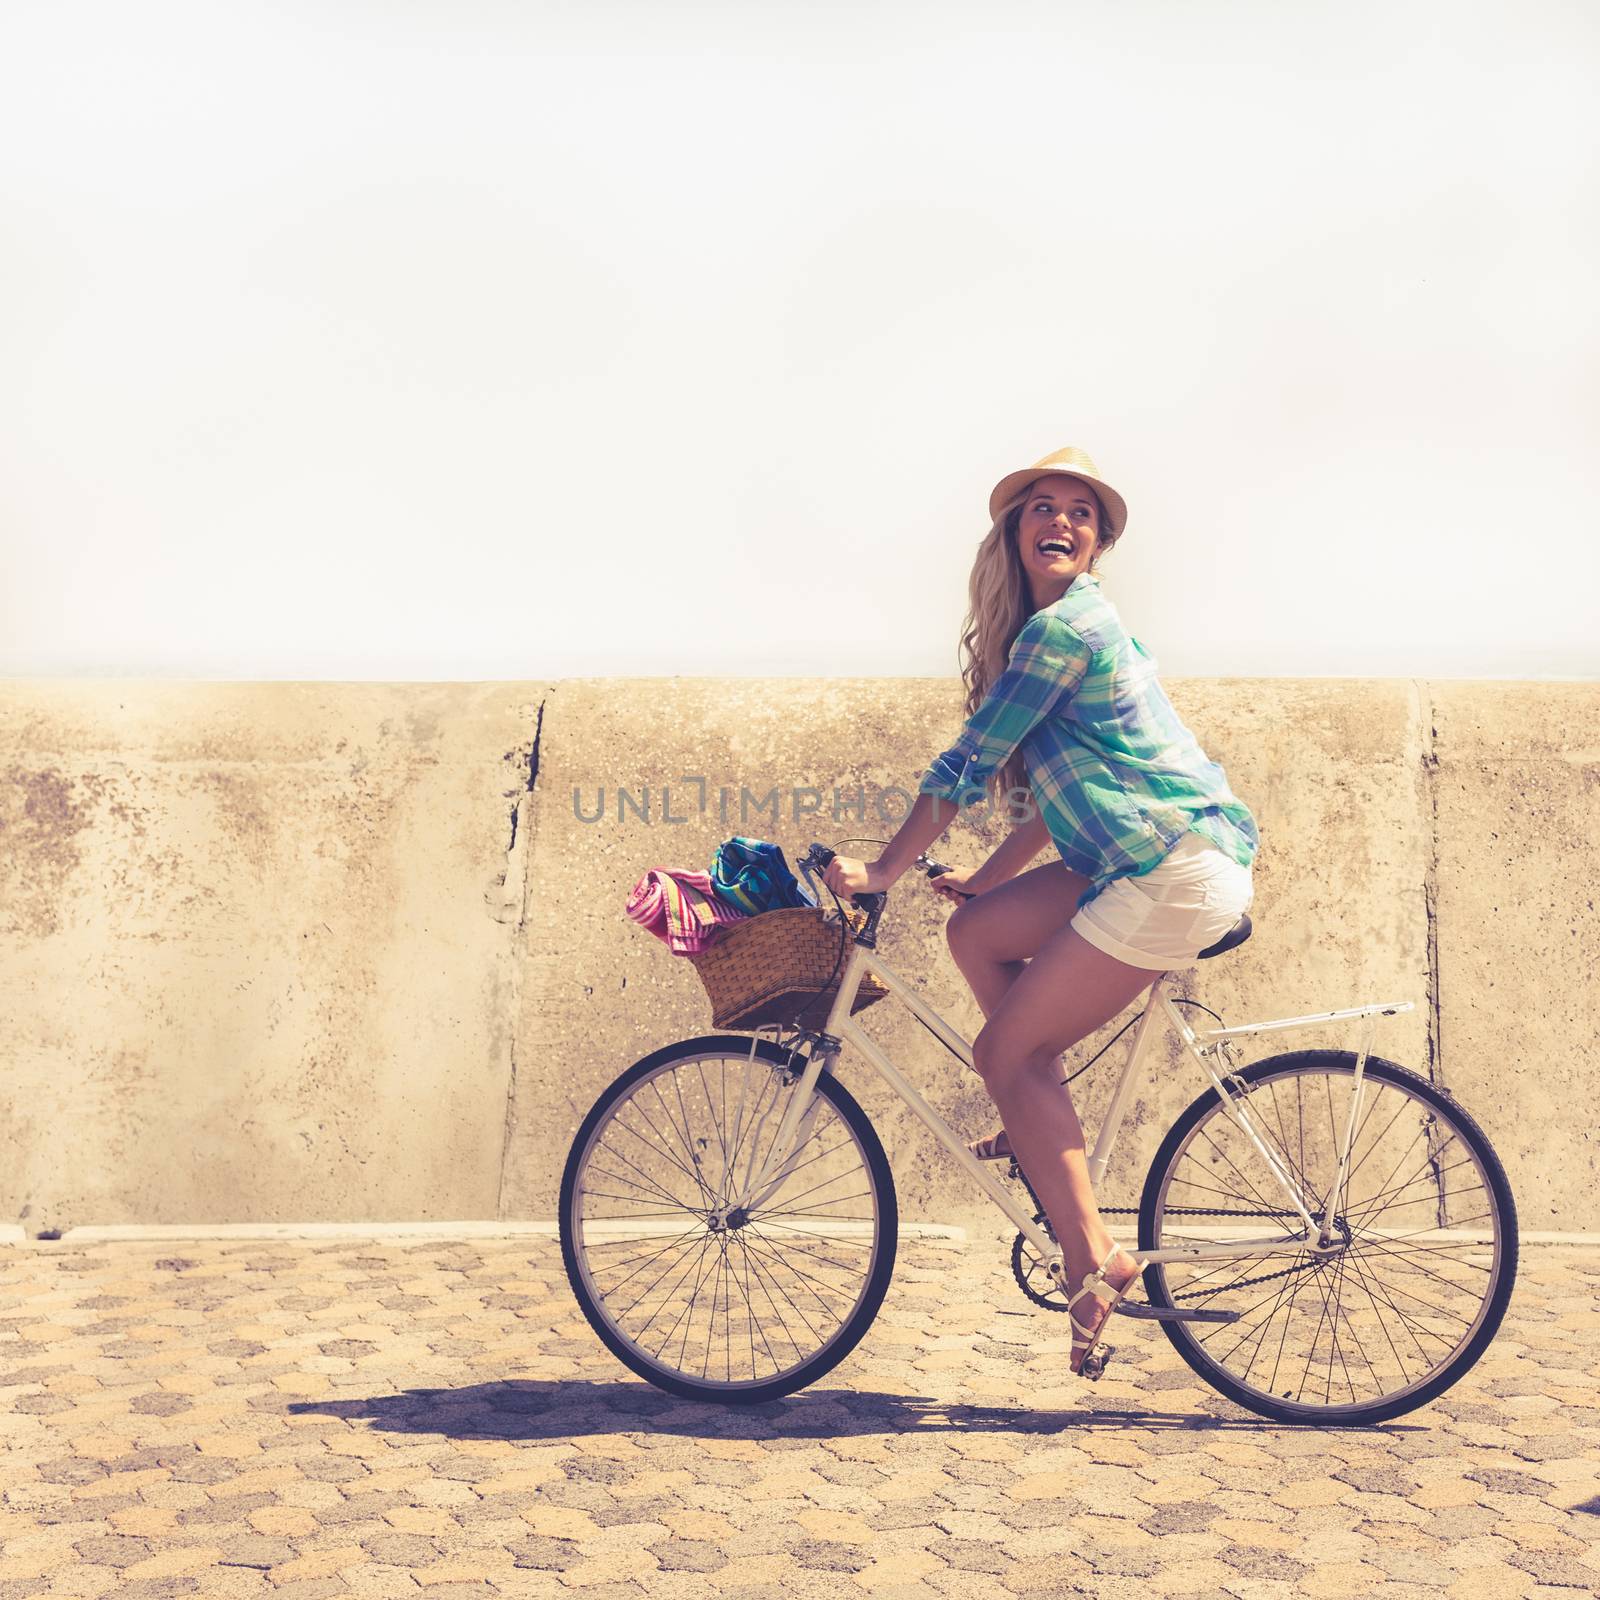 Cute blonde on a bike ride by Wavebreakmedia